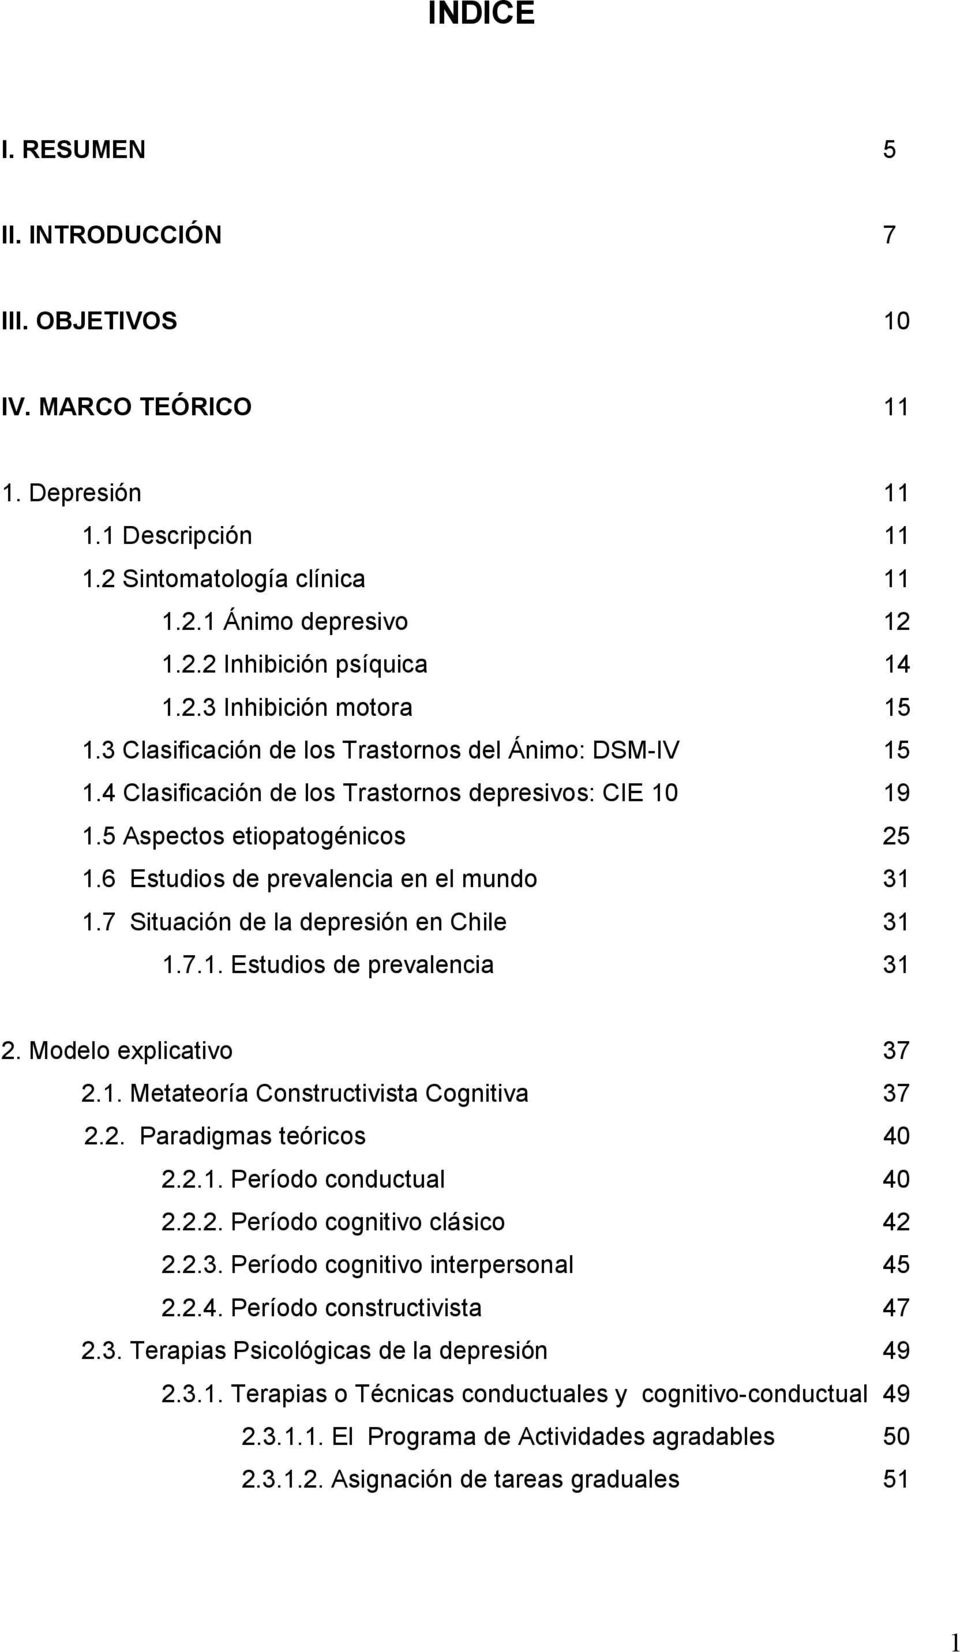 6 Estudios de prevalencia en el mundo 31 1.7 Situación de la depresión en Chile 31 1.7.1. Estudios de prevalencia 31 2. Modelo explicativo 37 2.1. Metateoría Constructivista Cognitiva 37 2.2. Paradigmas teóricos 40 2.